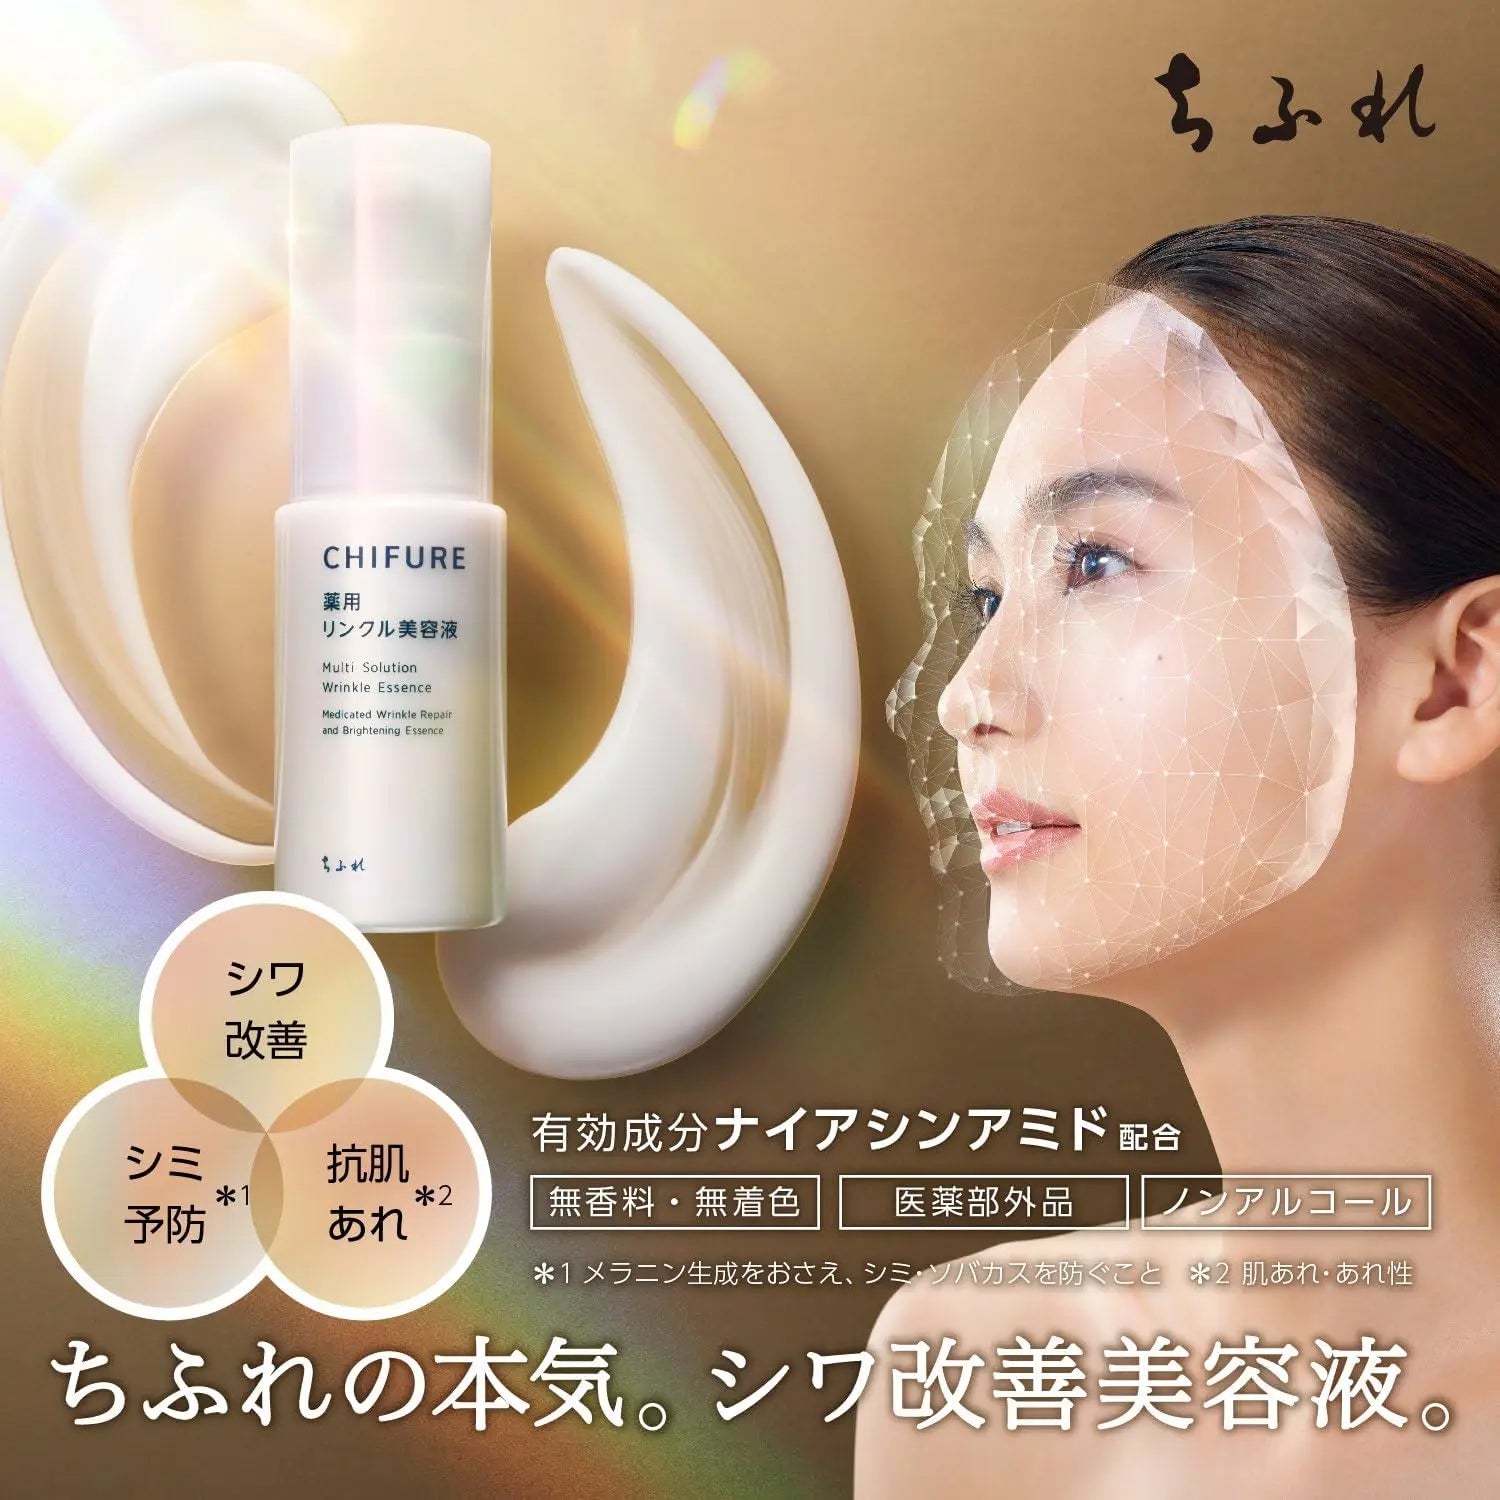 Chifure Multi Solution Wrinkle Niacinamide 5% Essence 30ml - Buy Me Japan